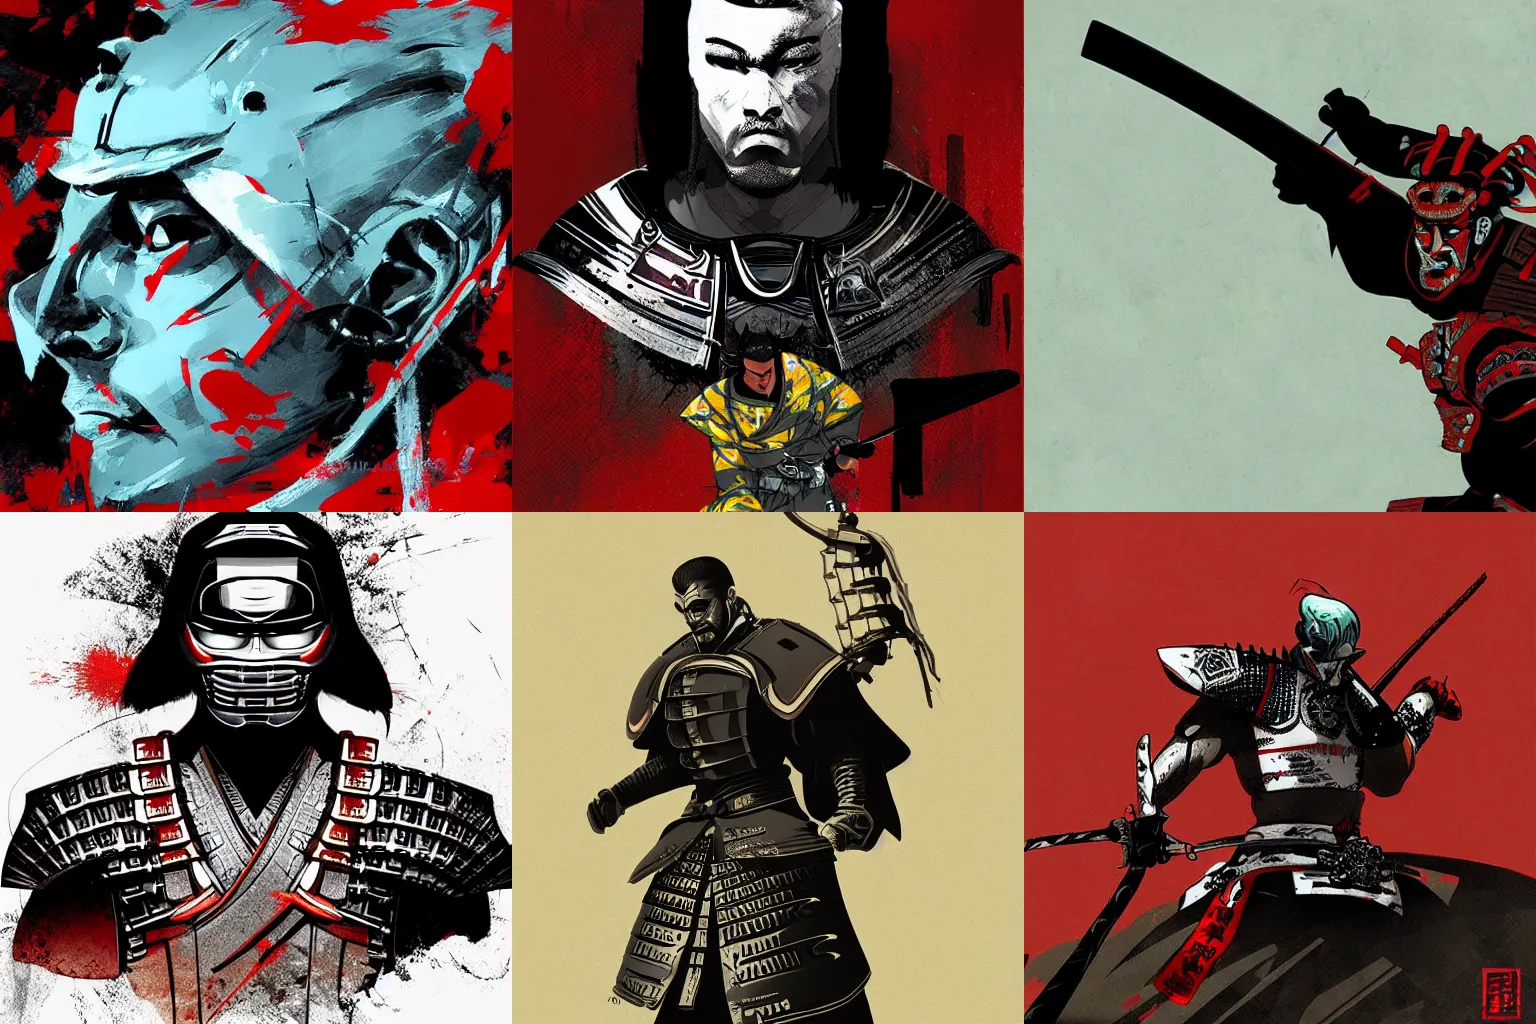 Prompt: artwork by brian sum showing a samurai